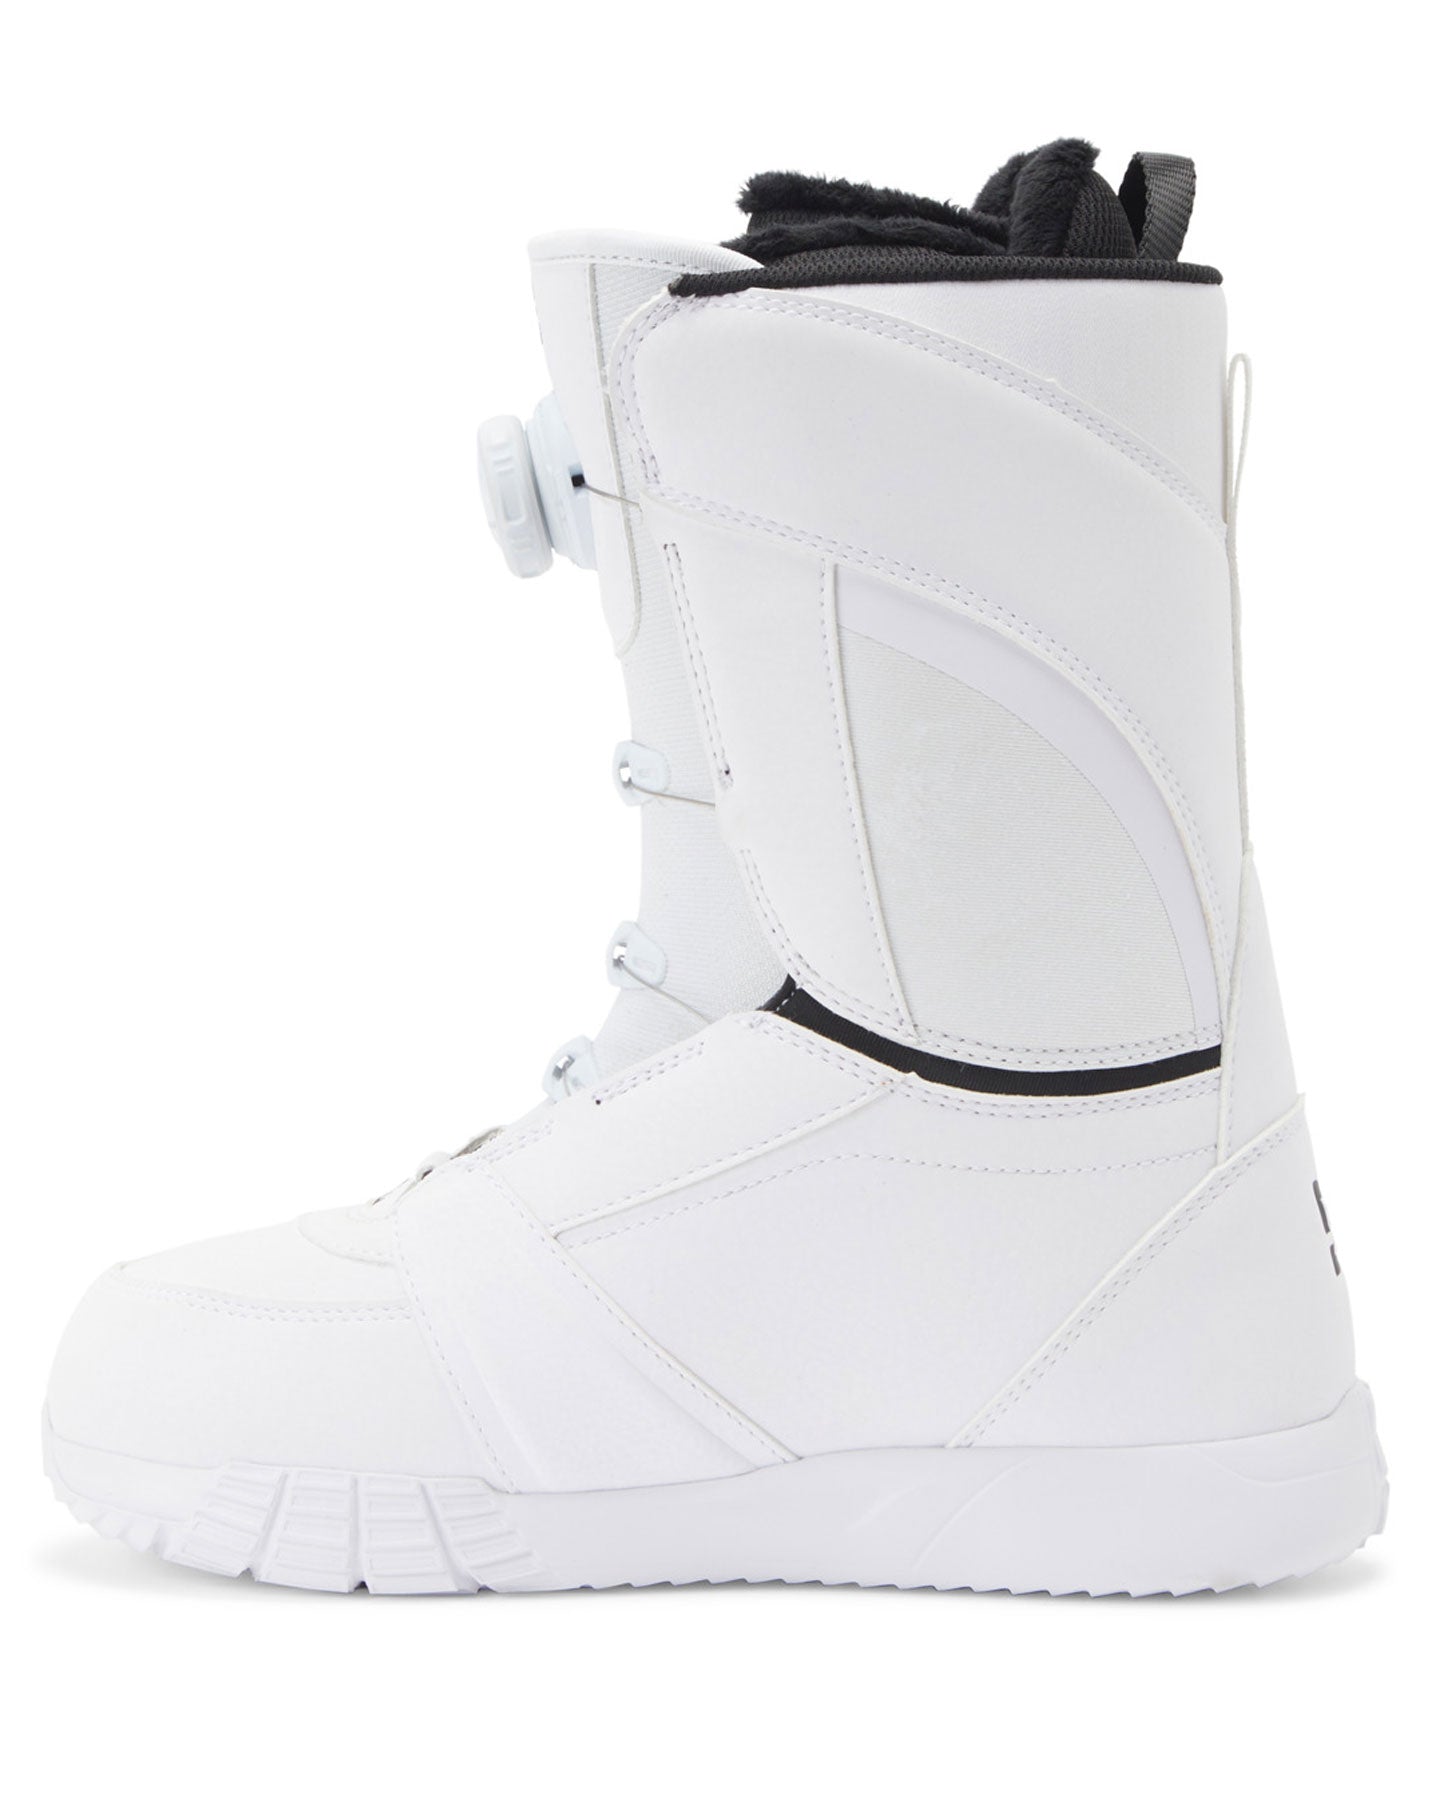 DC Women's Lotus Boa® Snowboard Boots - White/White Women's Snowboard Boots - SnowSkiersWarehouse